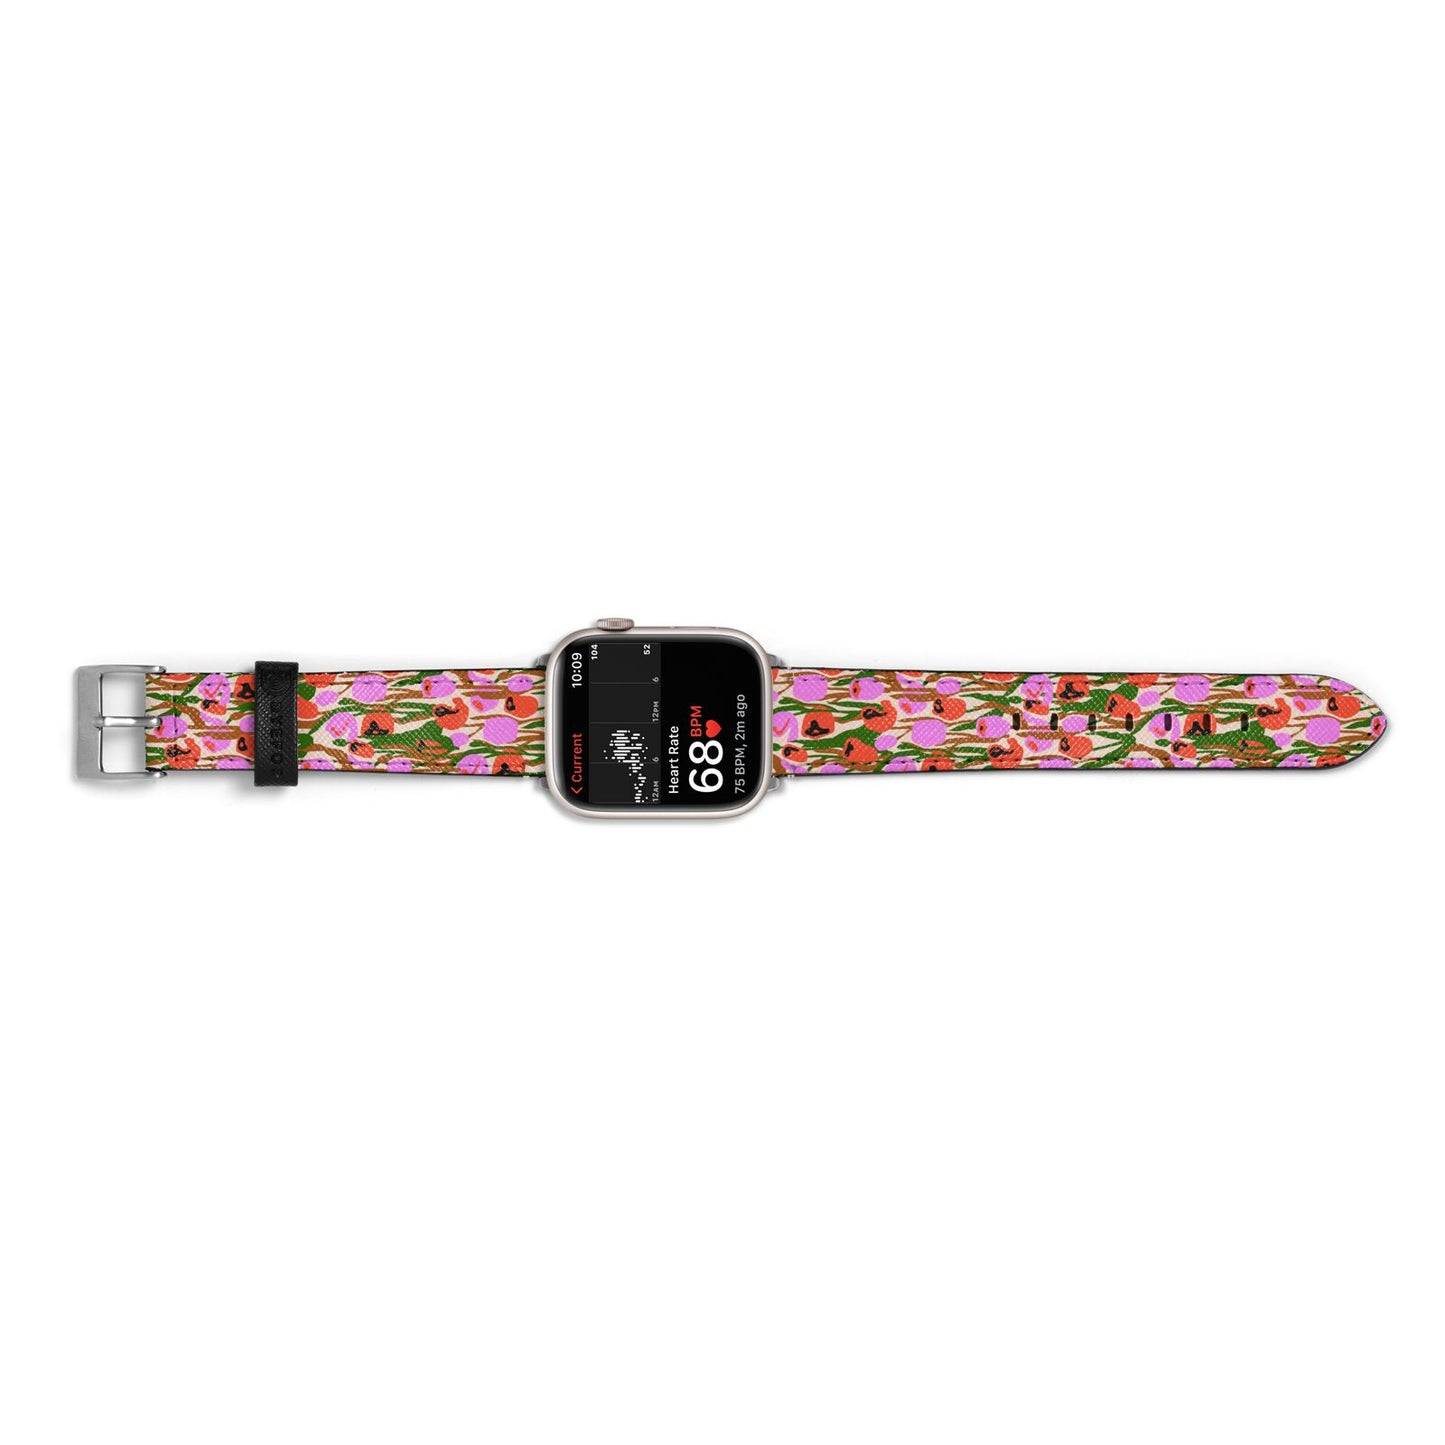 Floral Apple Watch Strap Size 38mm Landscape Image Silver Hardware